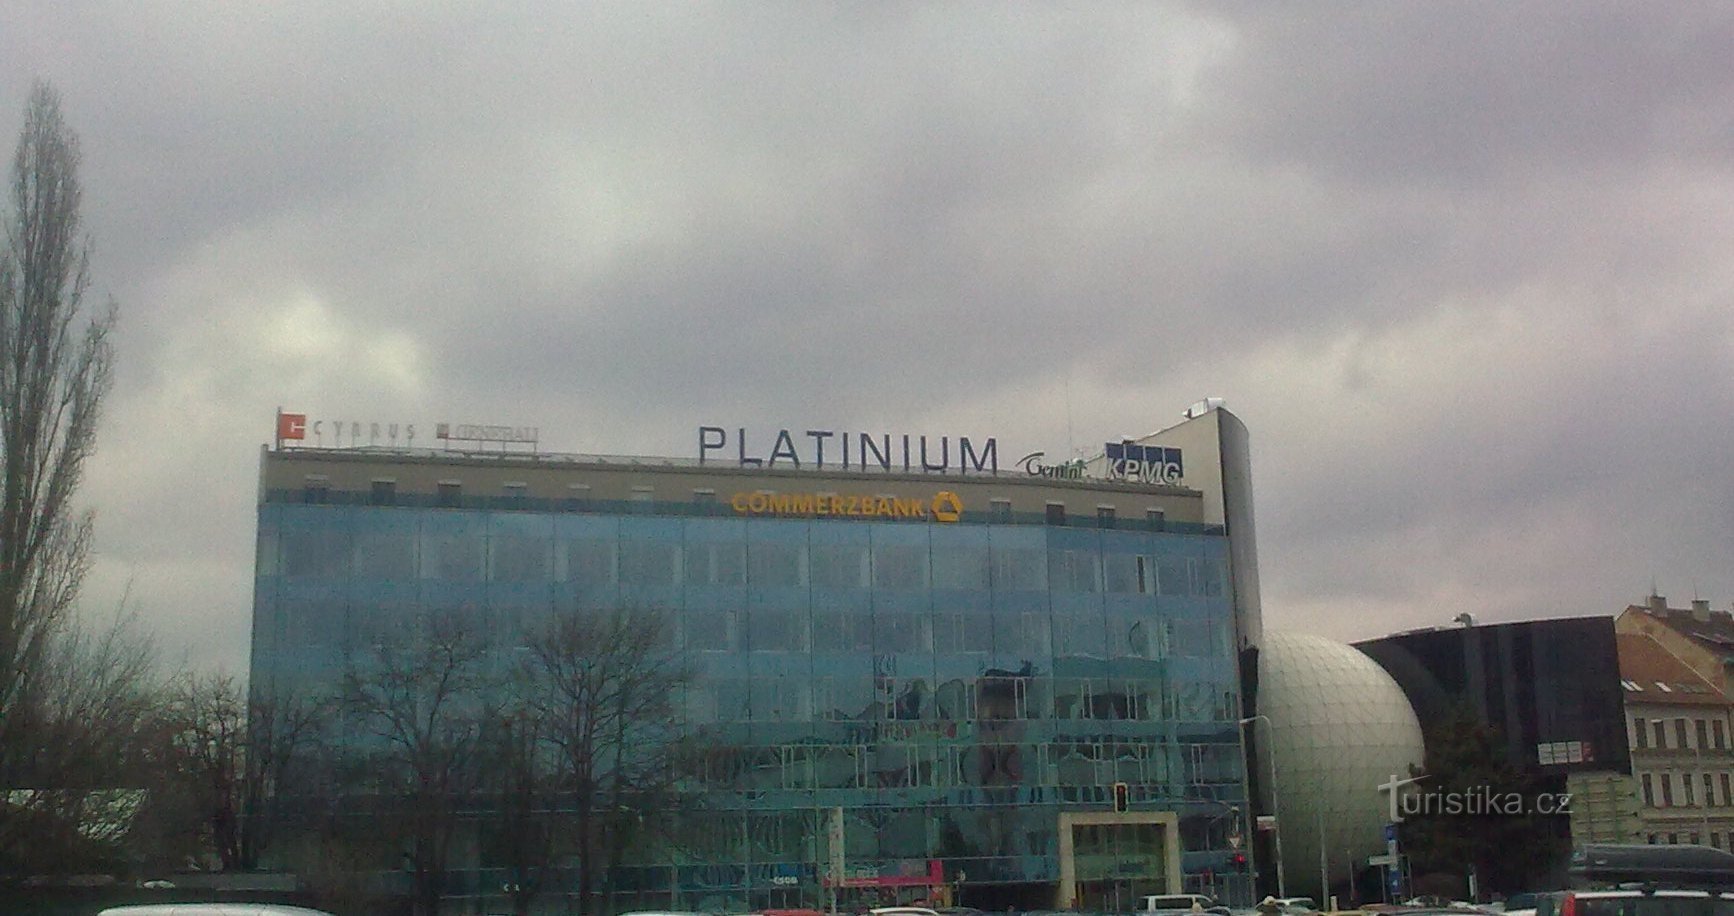 Platinium with SONO center